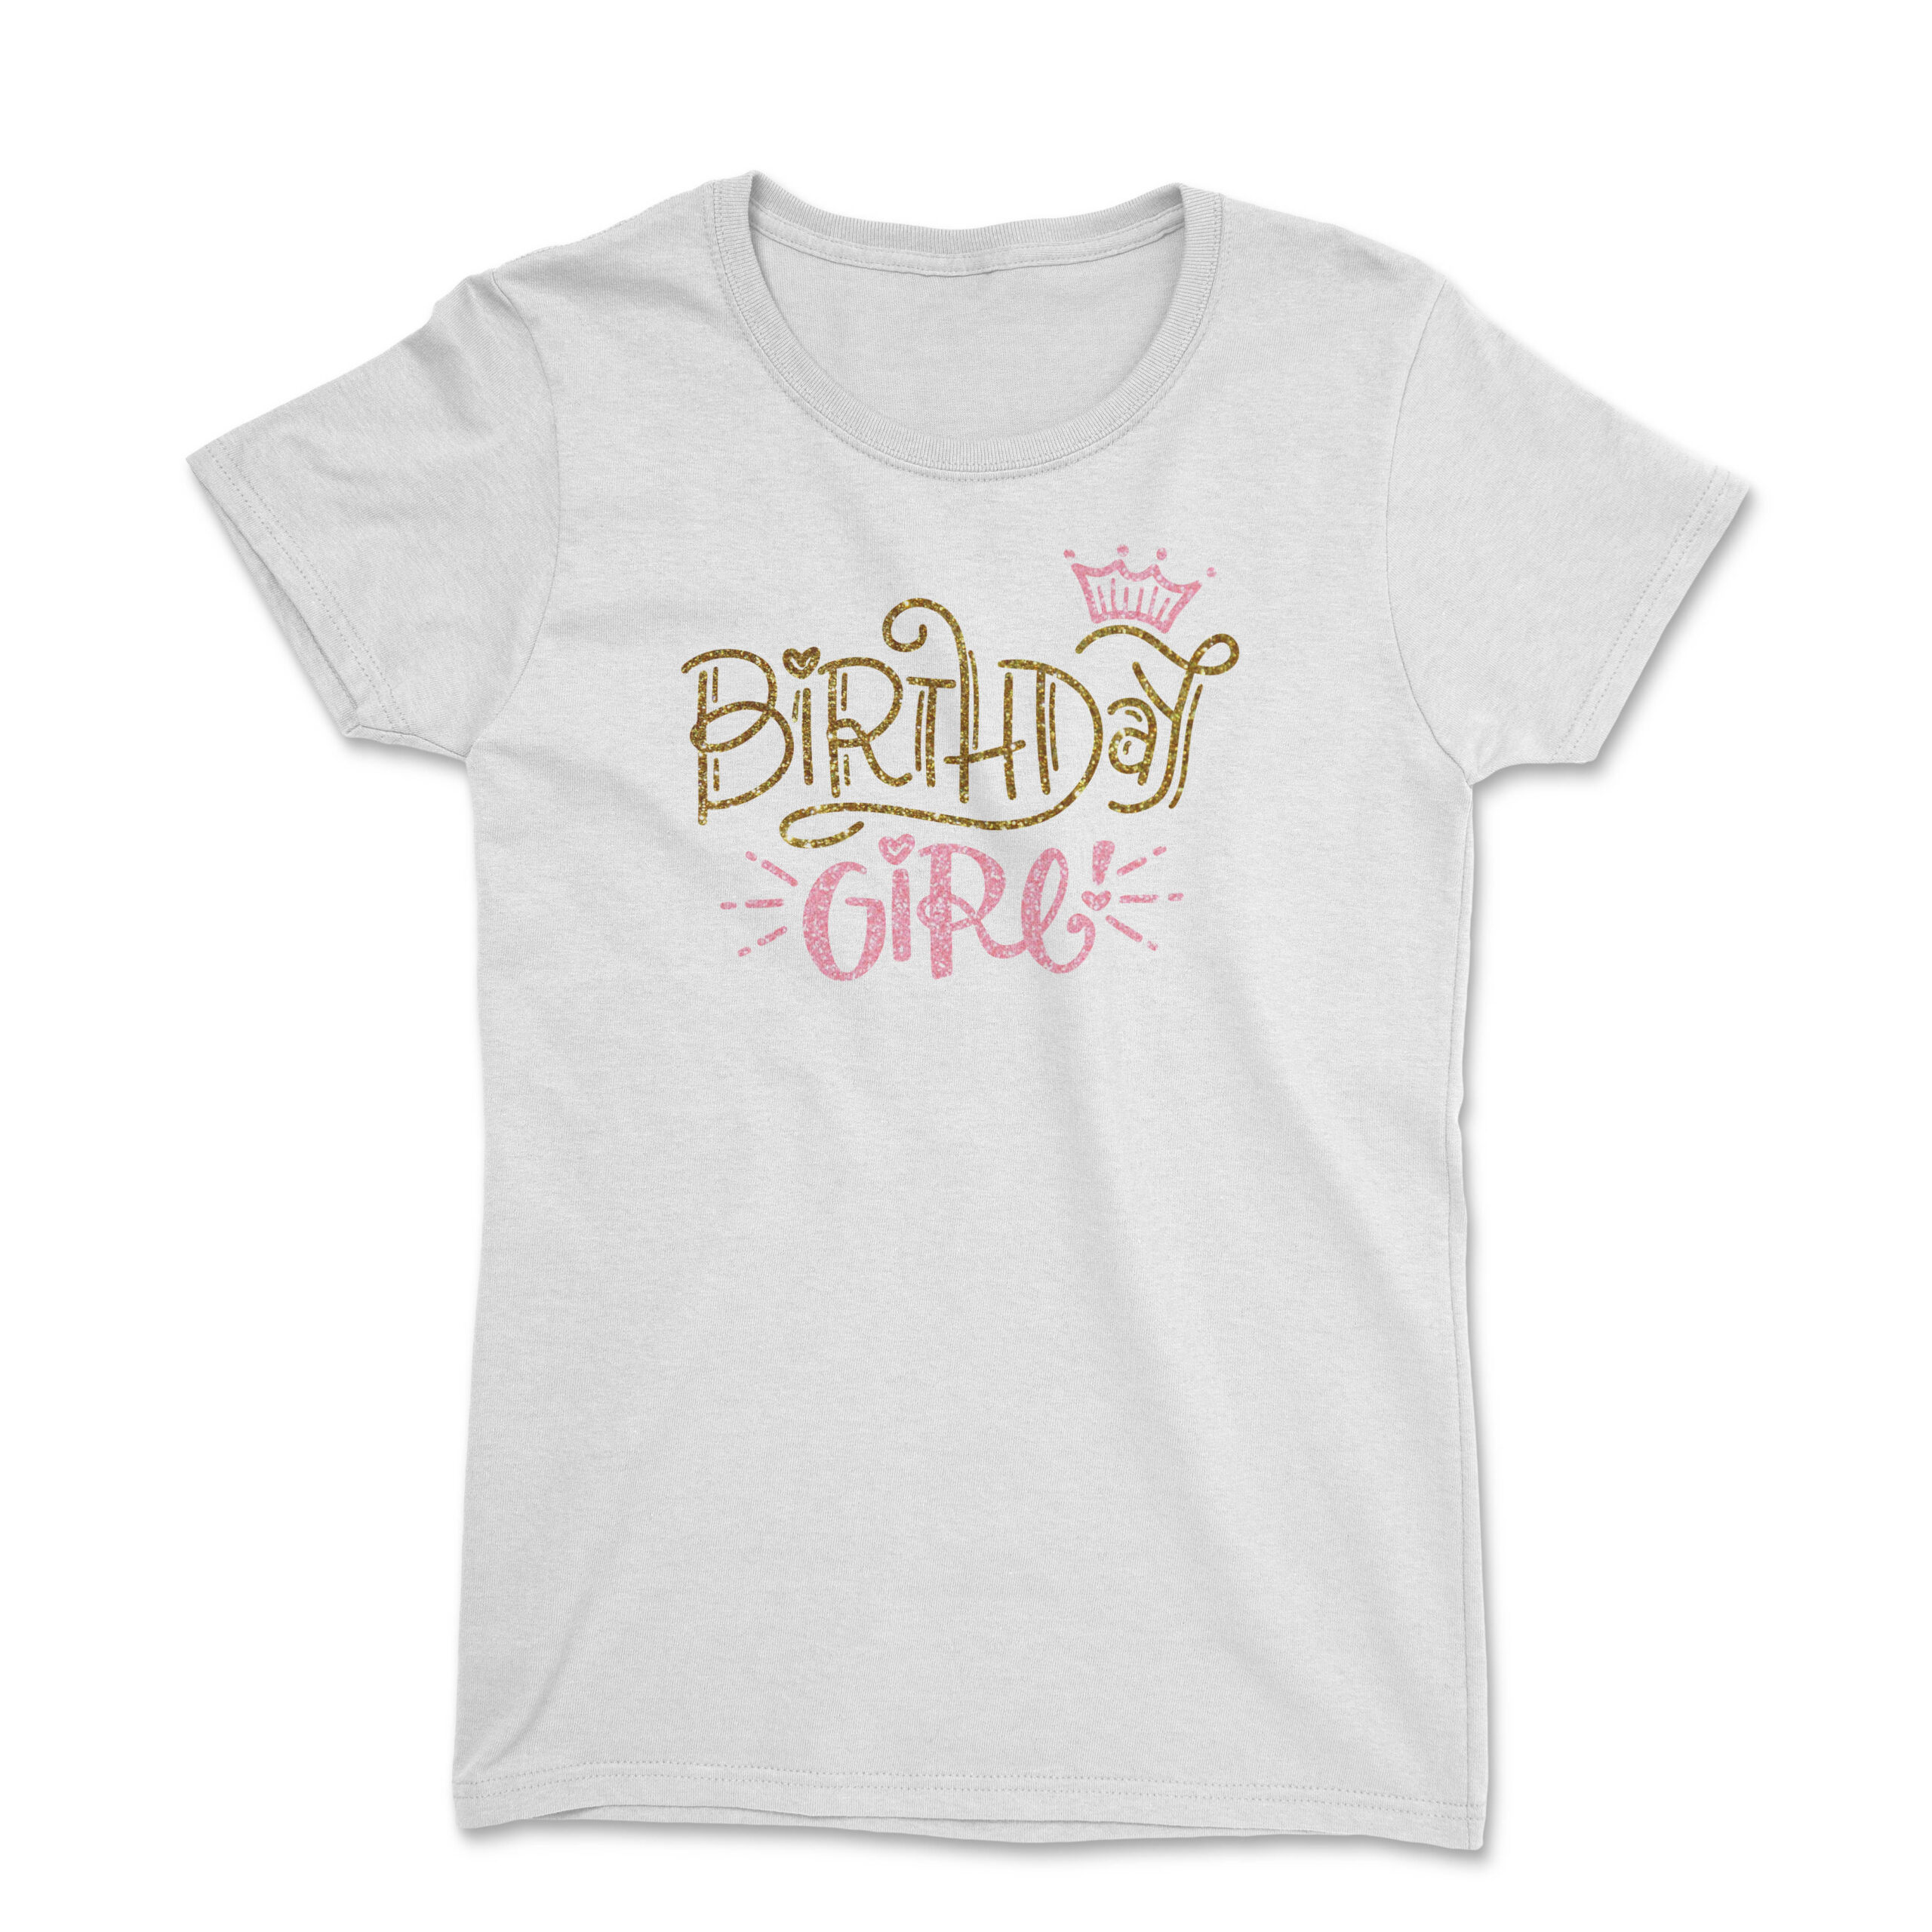 Birthday girl unisex T-shirt